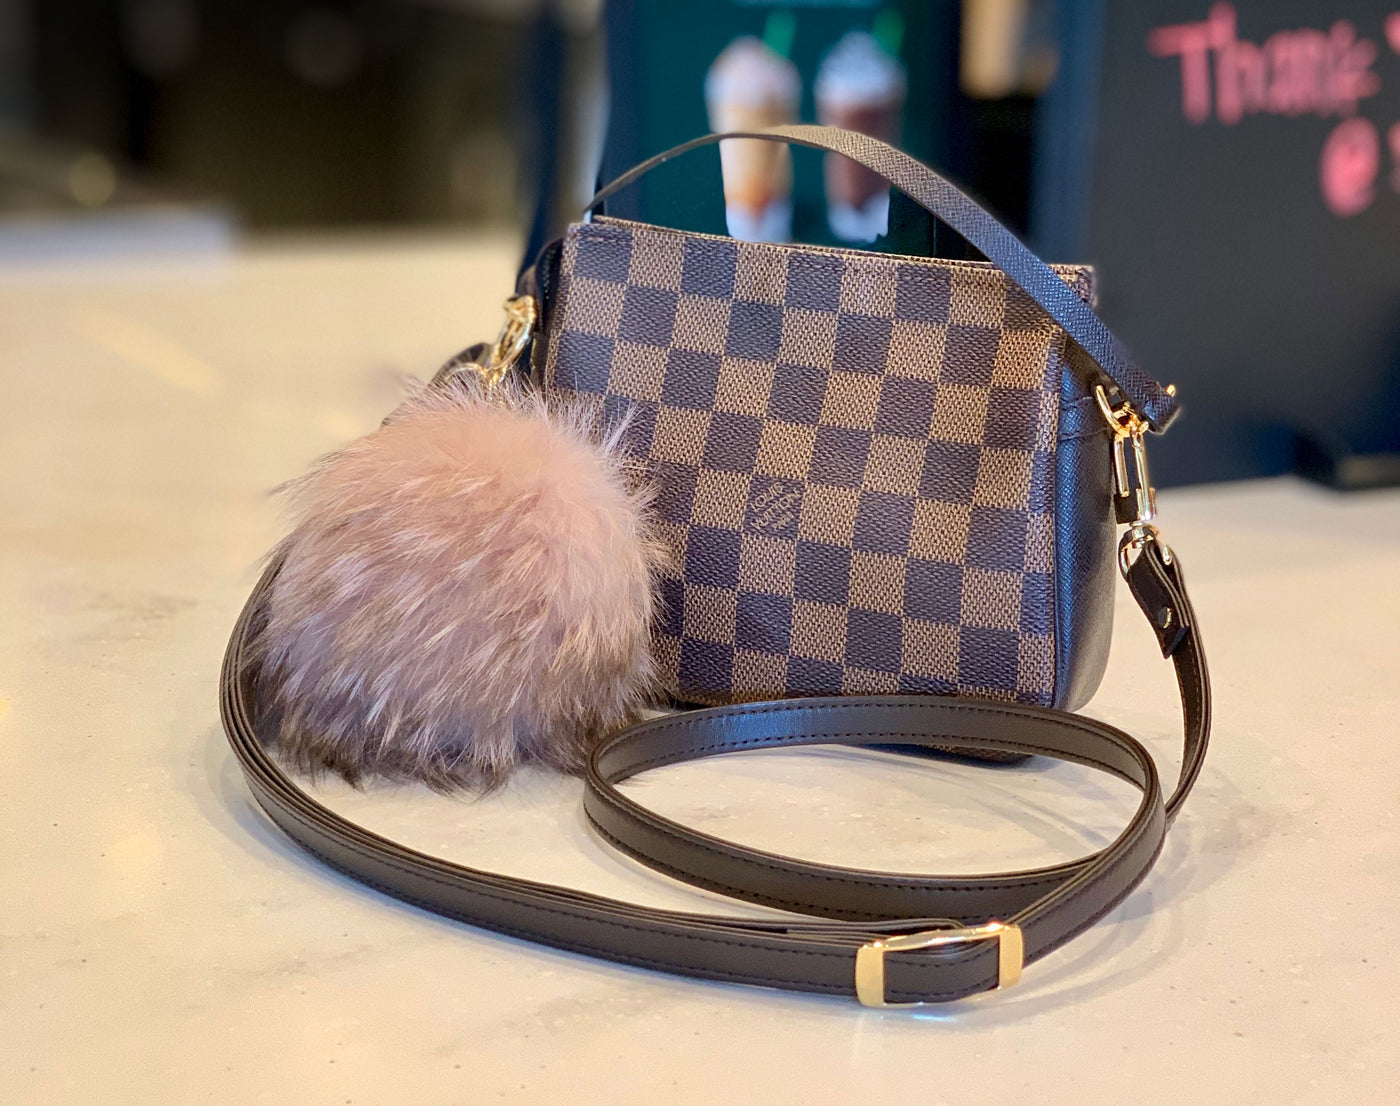 LV mini handbag with Dark Brown DE adjustable leather purse strap by Mautto.